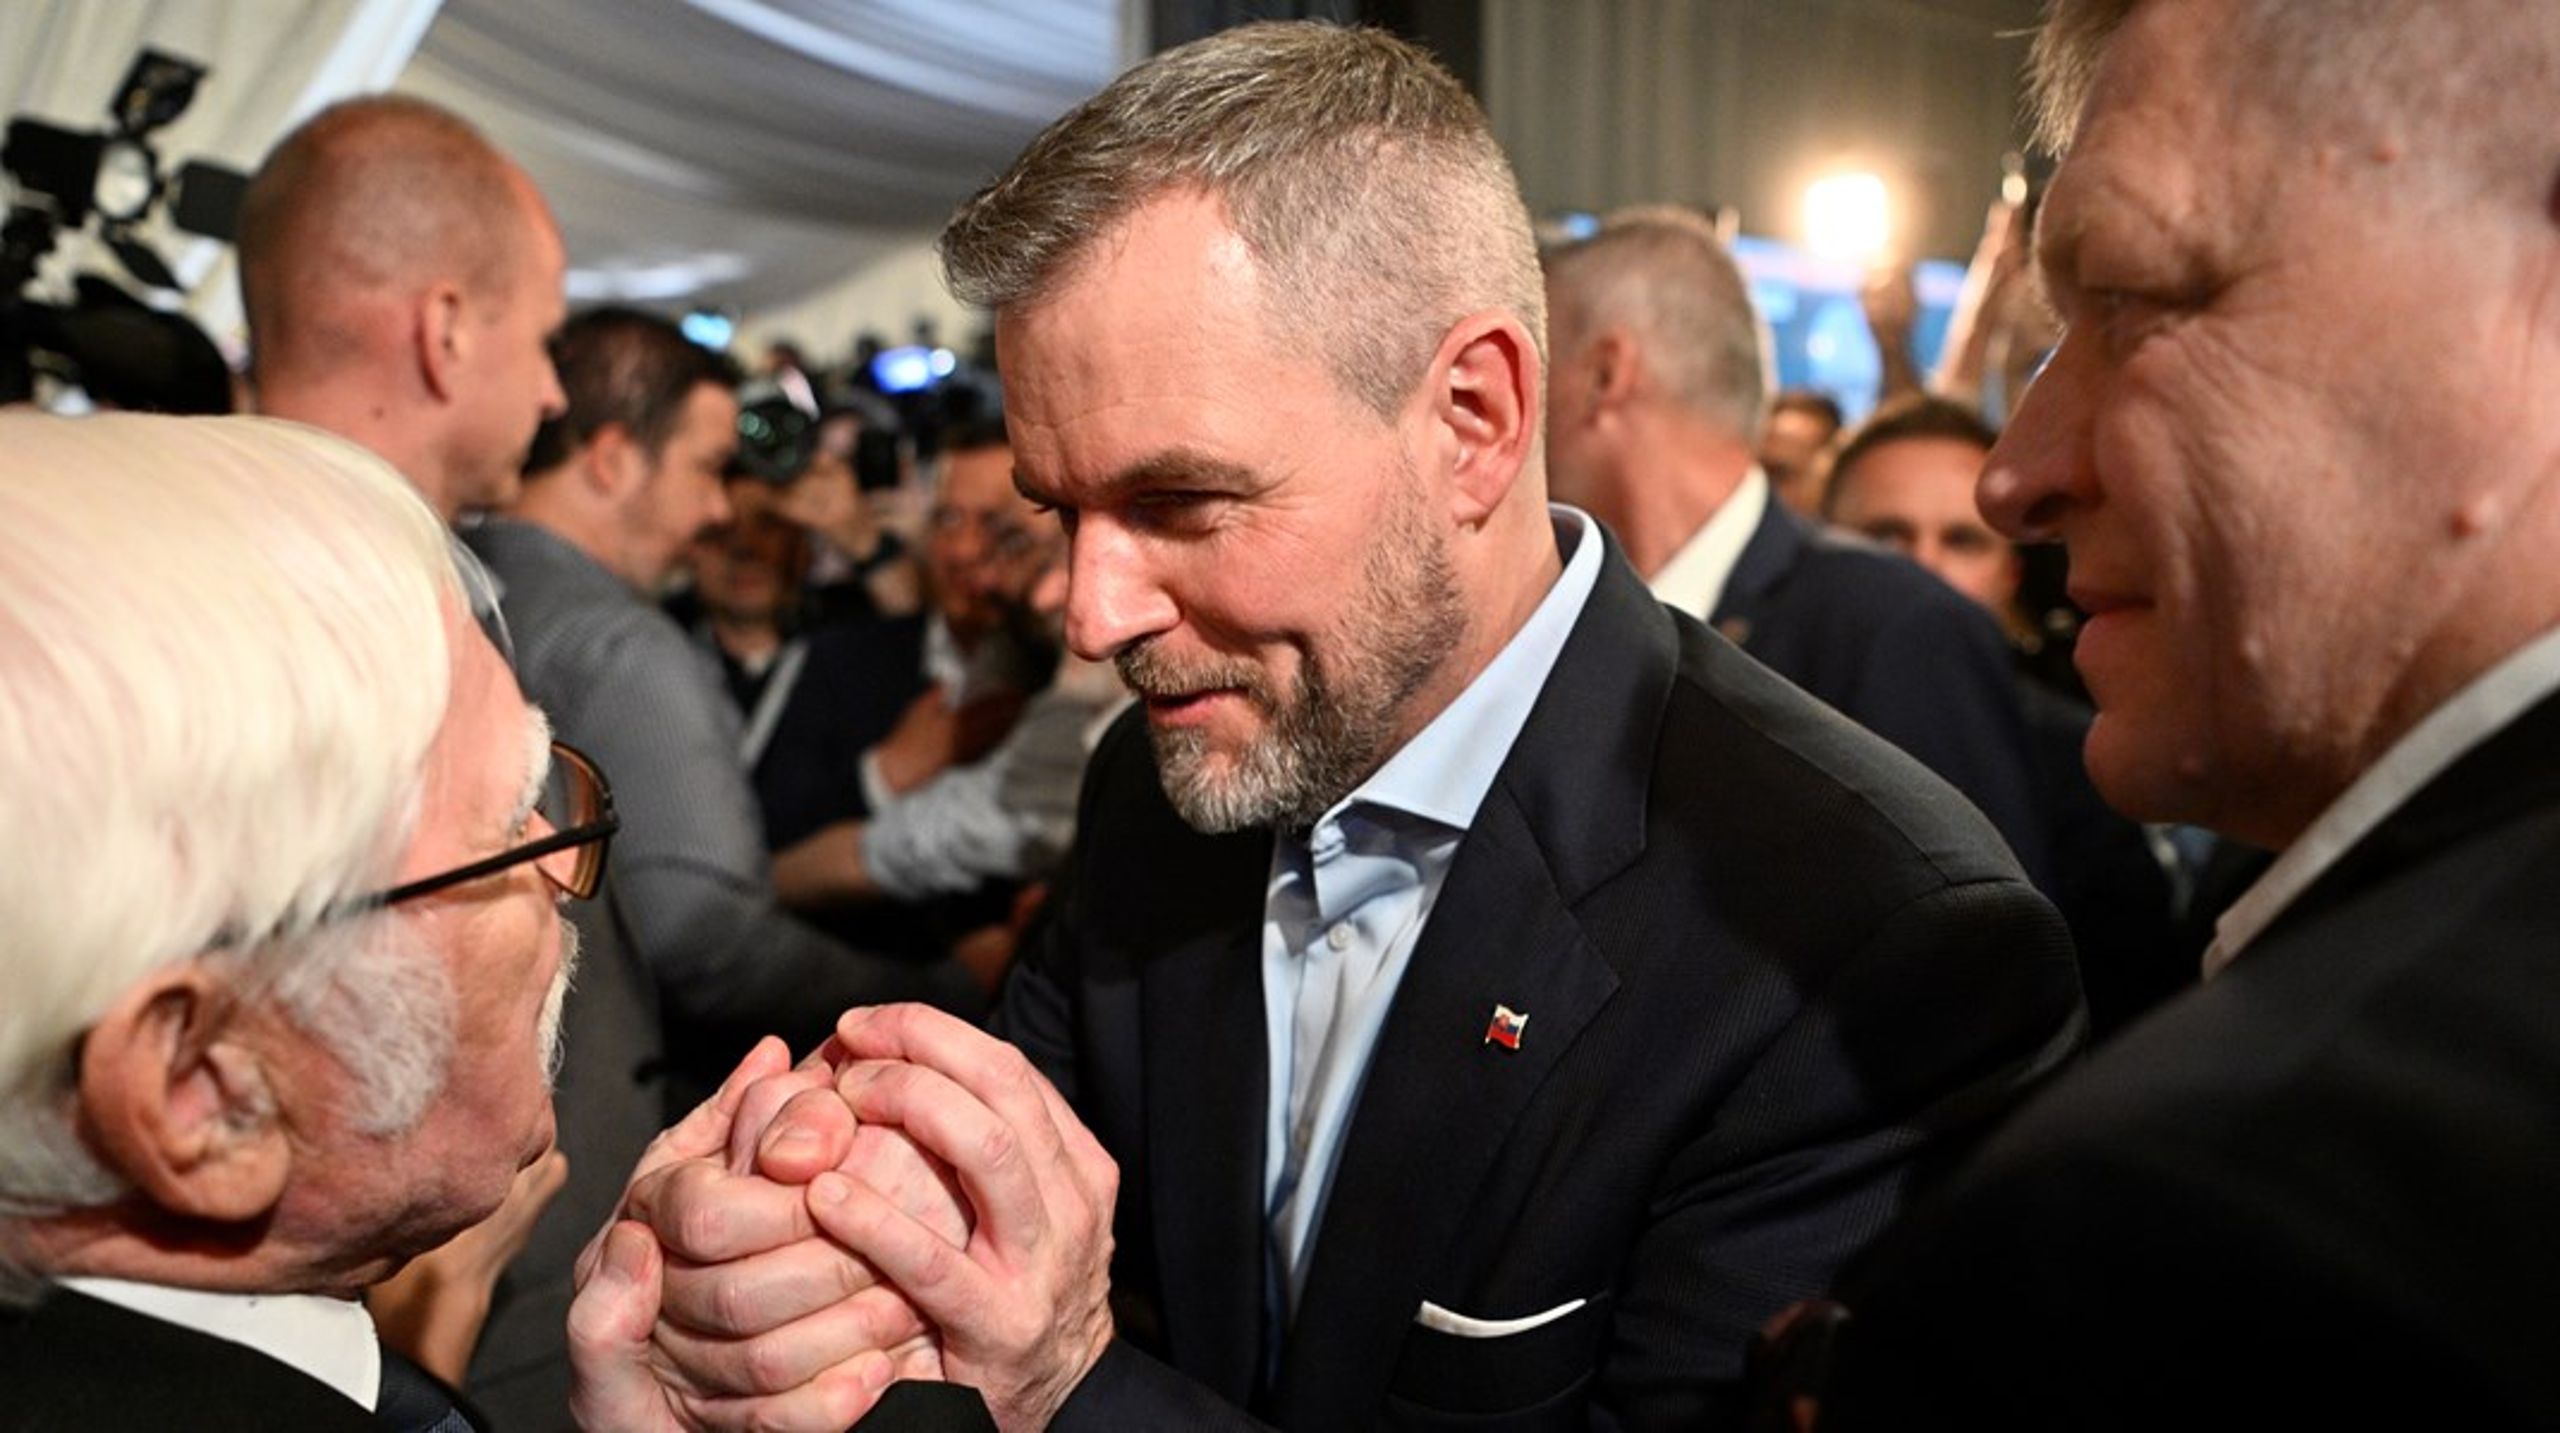 Peter Pellegrinis valgsejr konsoliderer&nbsp;premierminister Robert Ficos magt i Slovakiet.